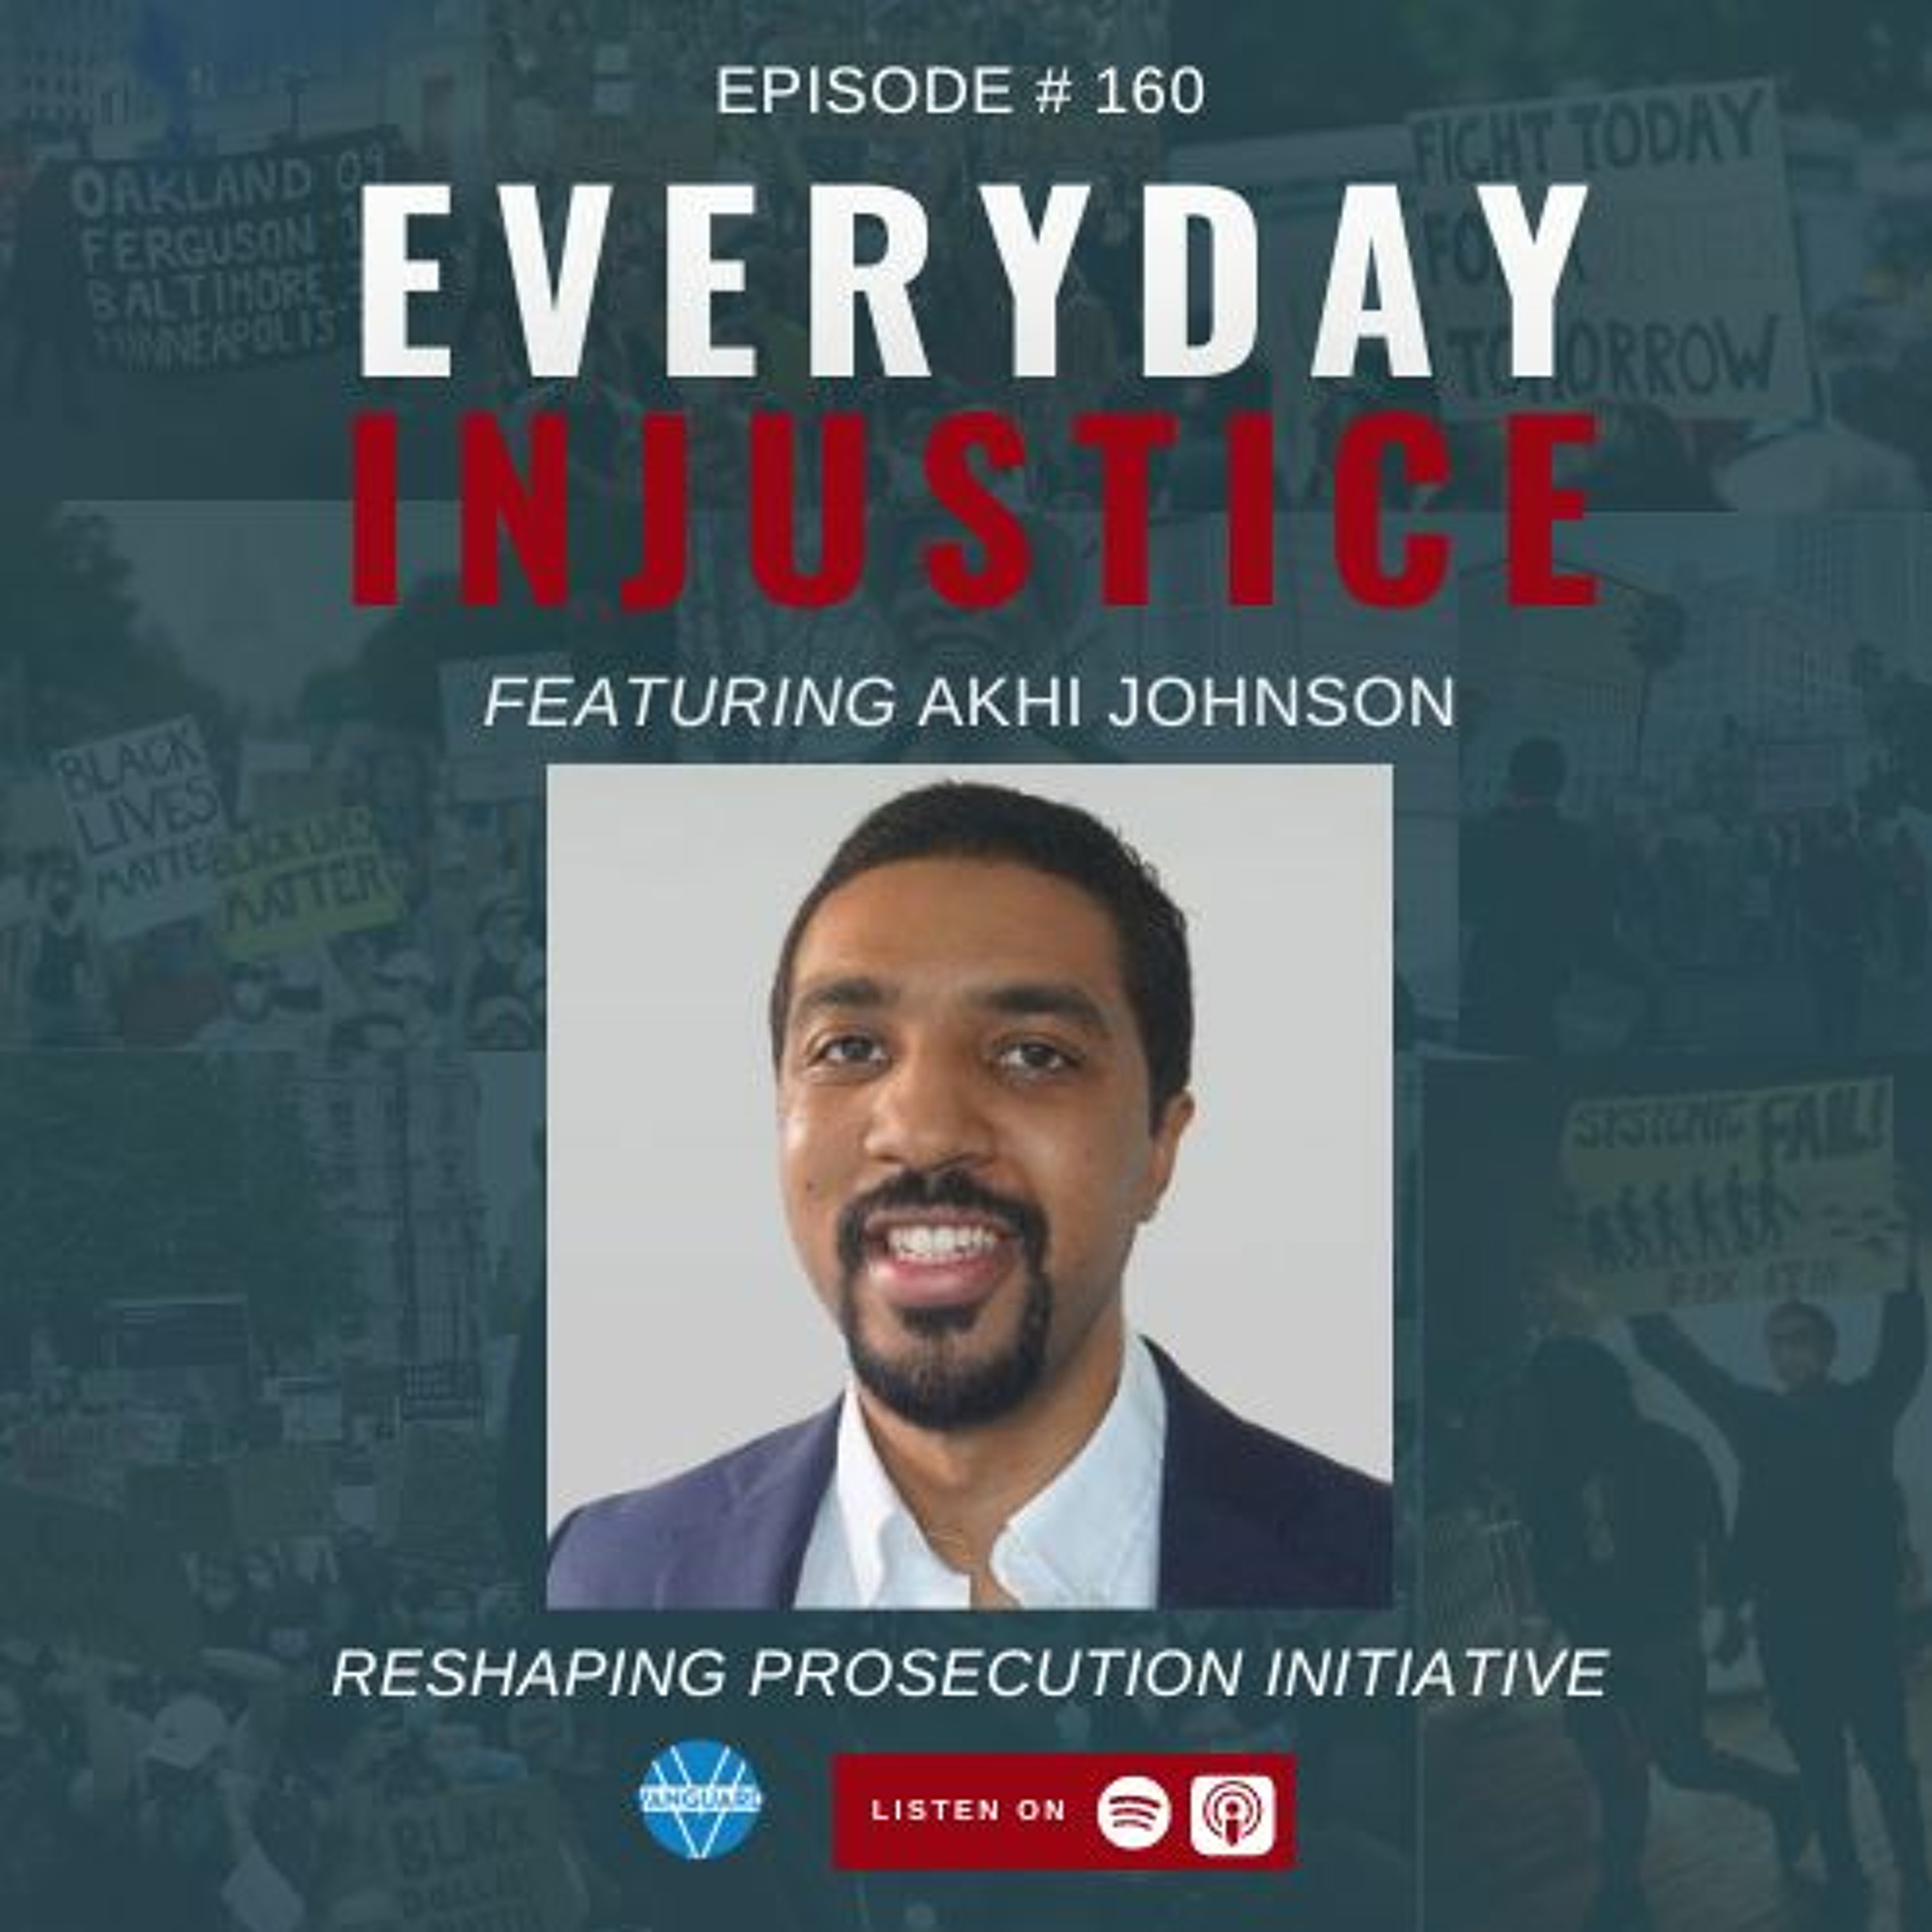 Everyday Injustice Podcast Episode 160 – Akhi Johnson Discussing Reshaping Prosecution Initiative